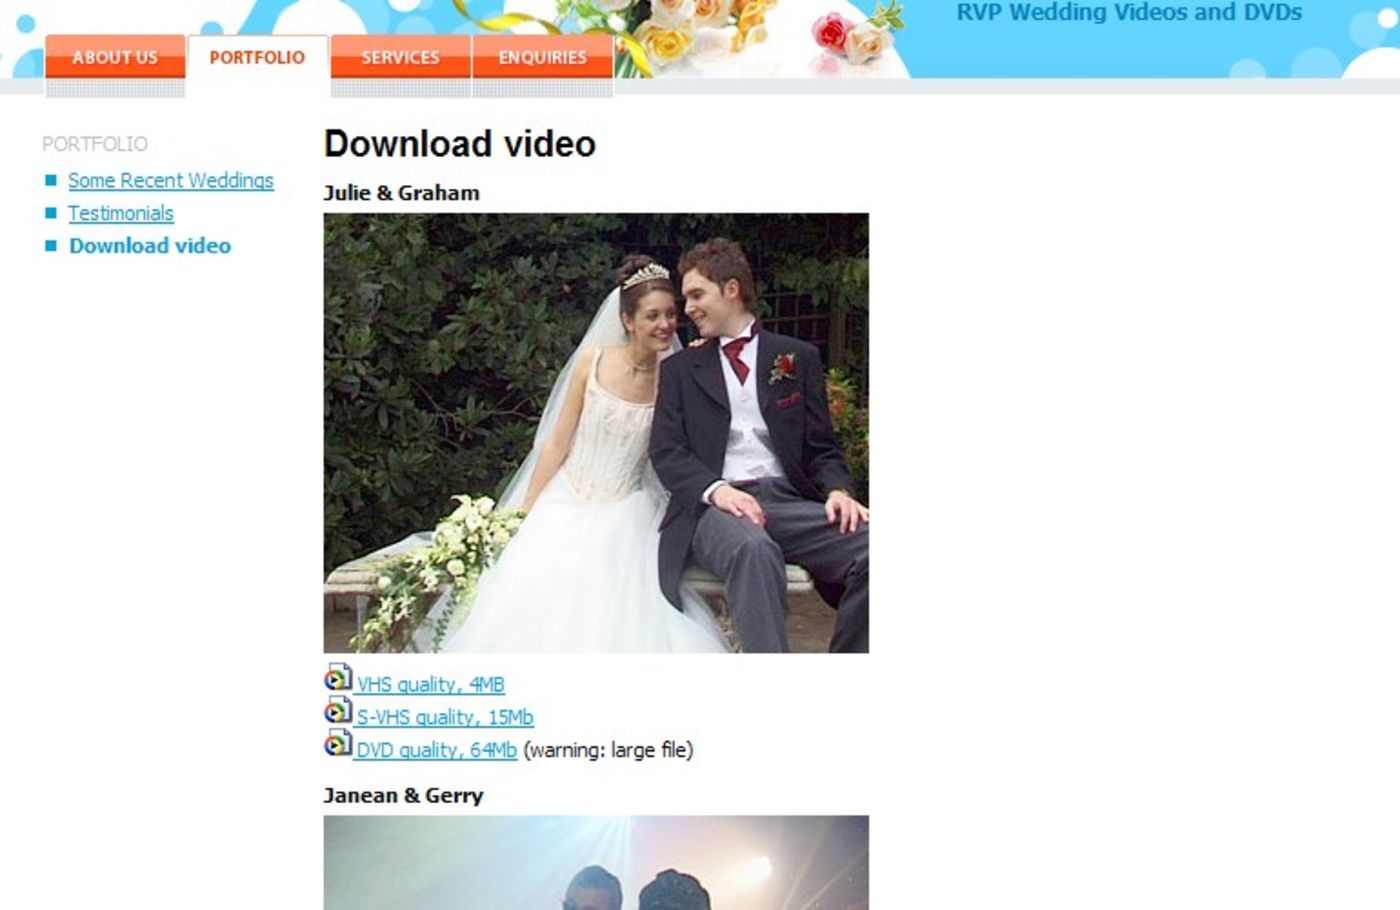 RVP Wedding Videos and DVDs Portfolio page